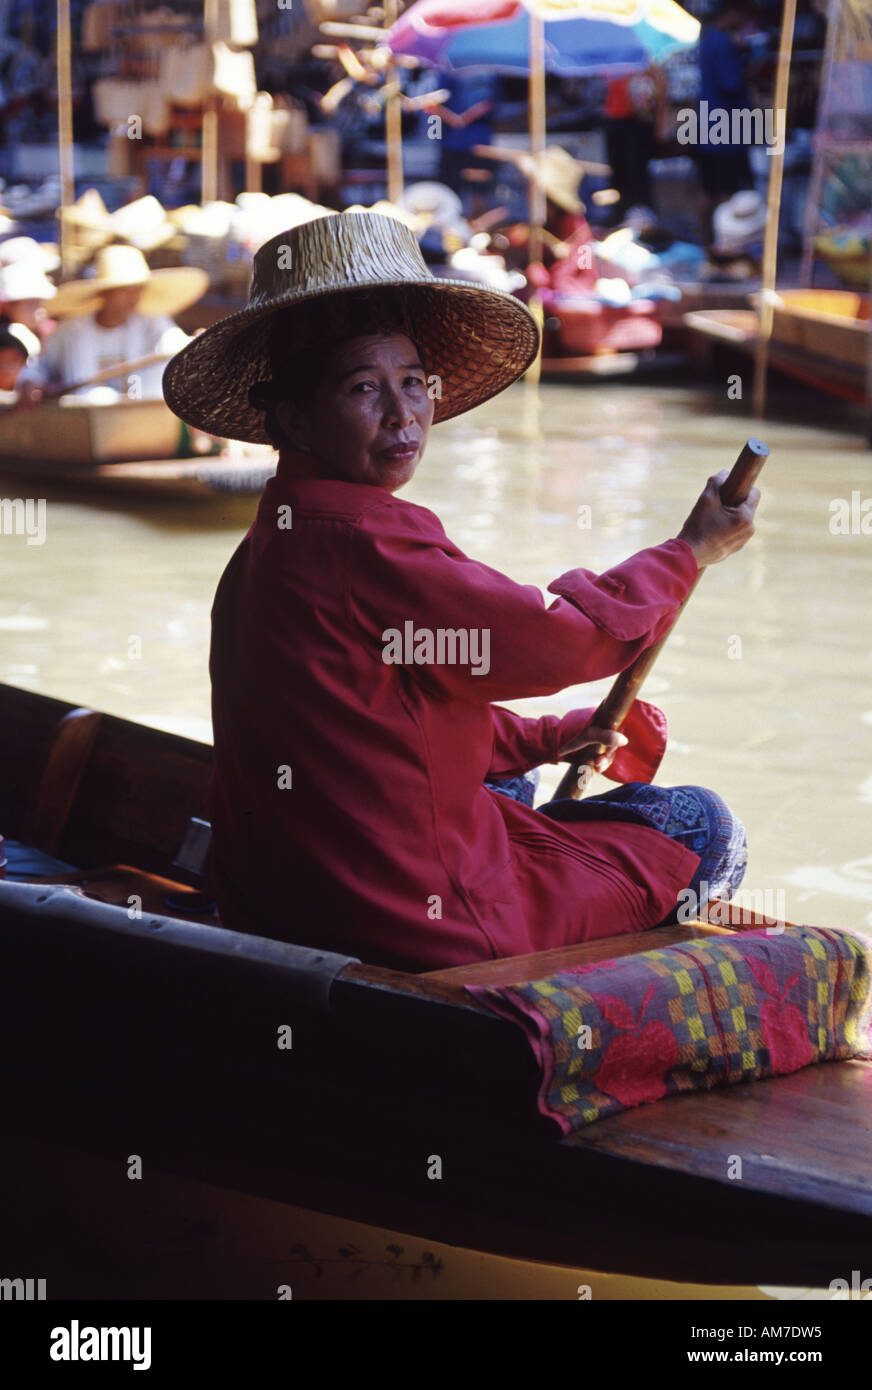 Floating market at Damneurnsaduak Thailand Image of a fruit seller on her boat paddling Stock Photo